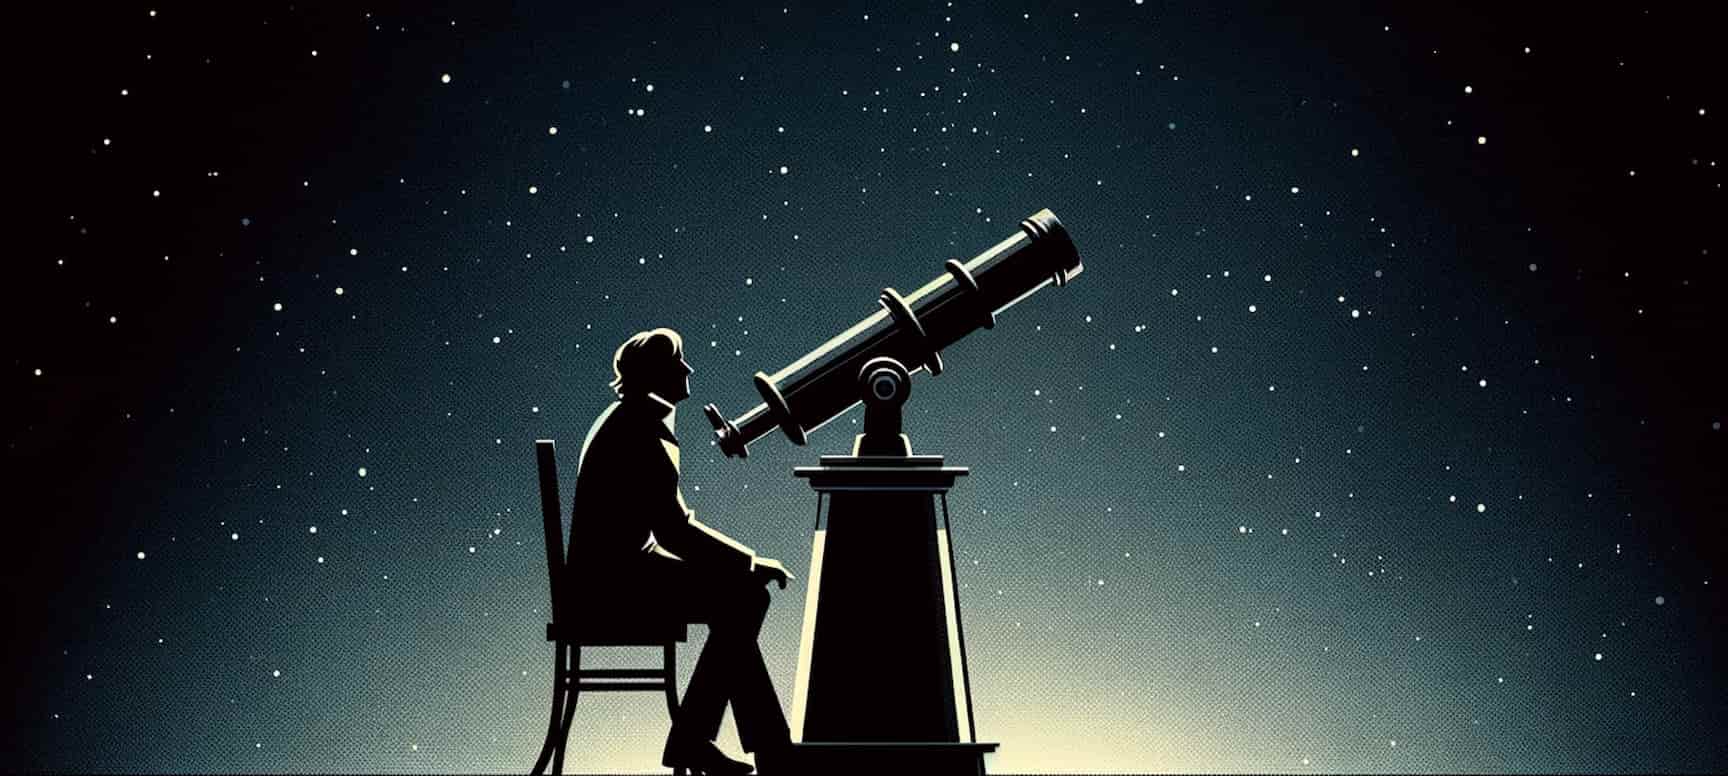 digital art of astronomer